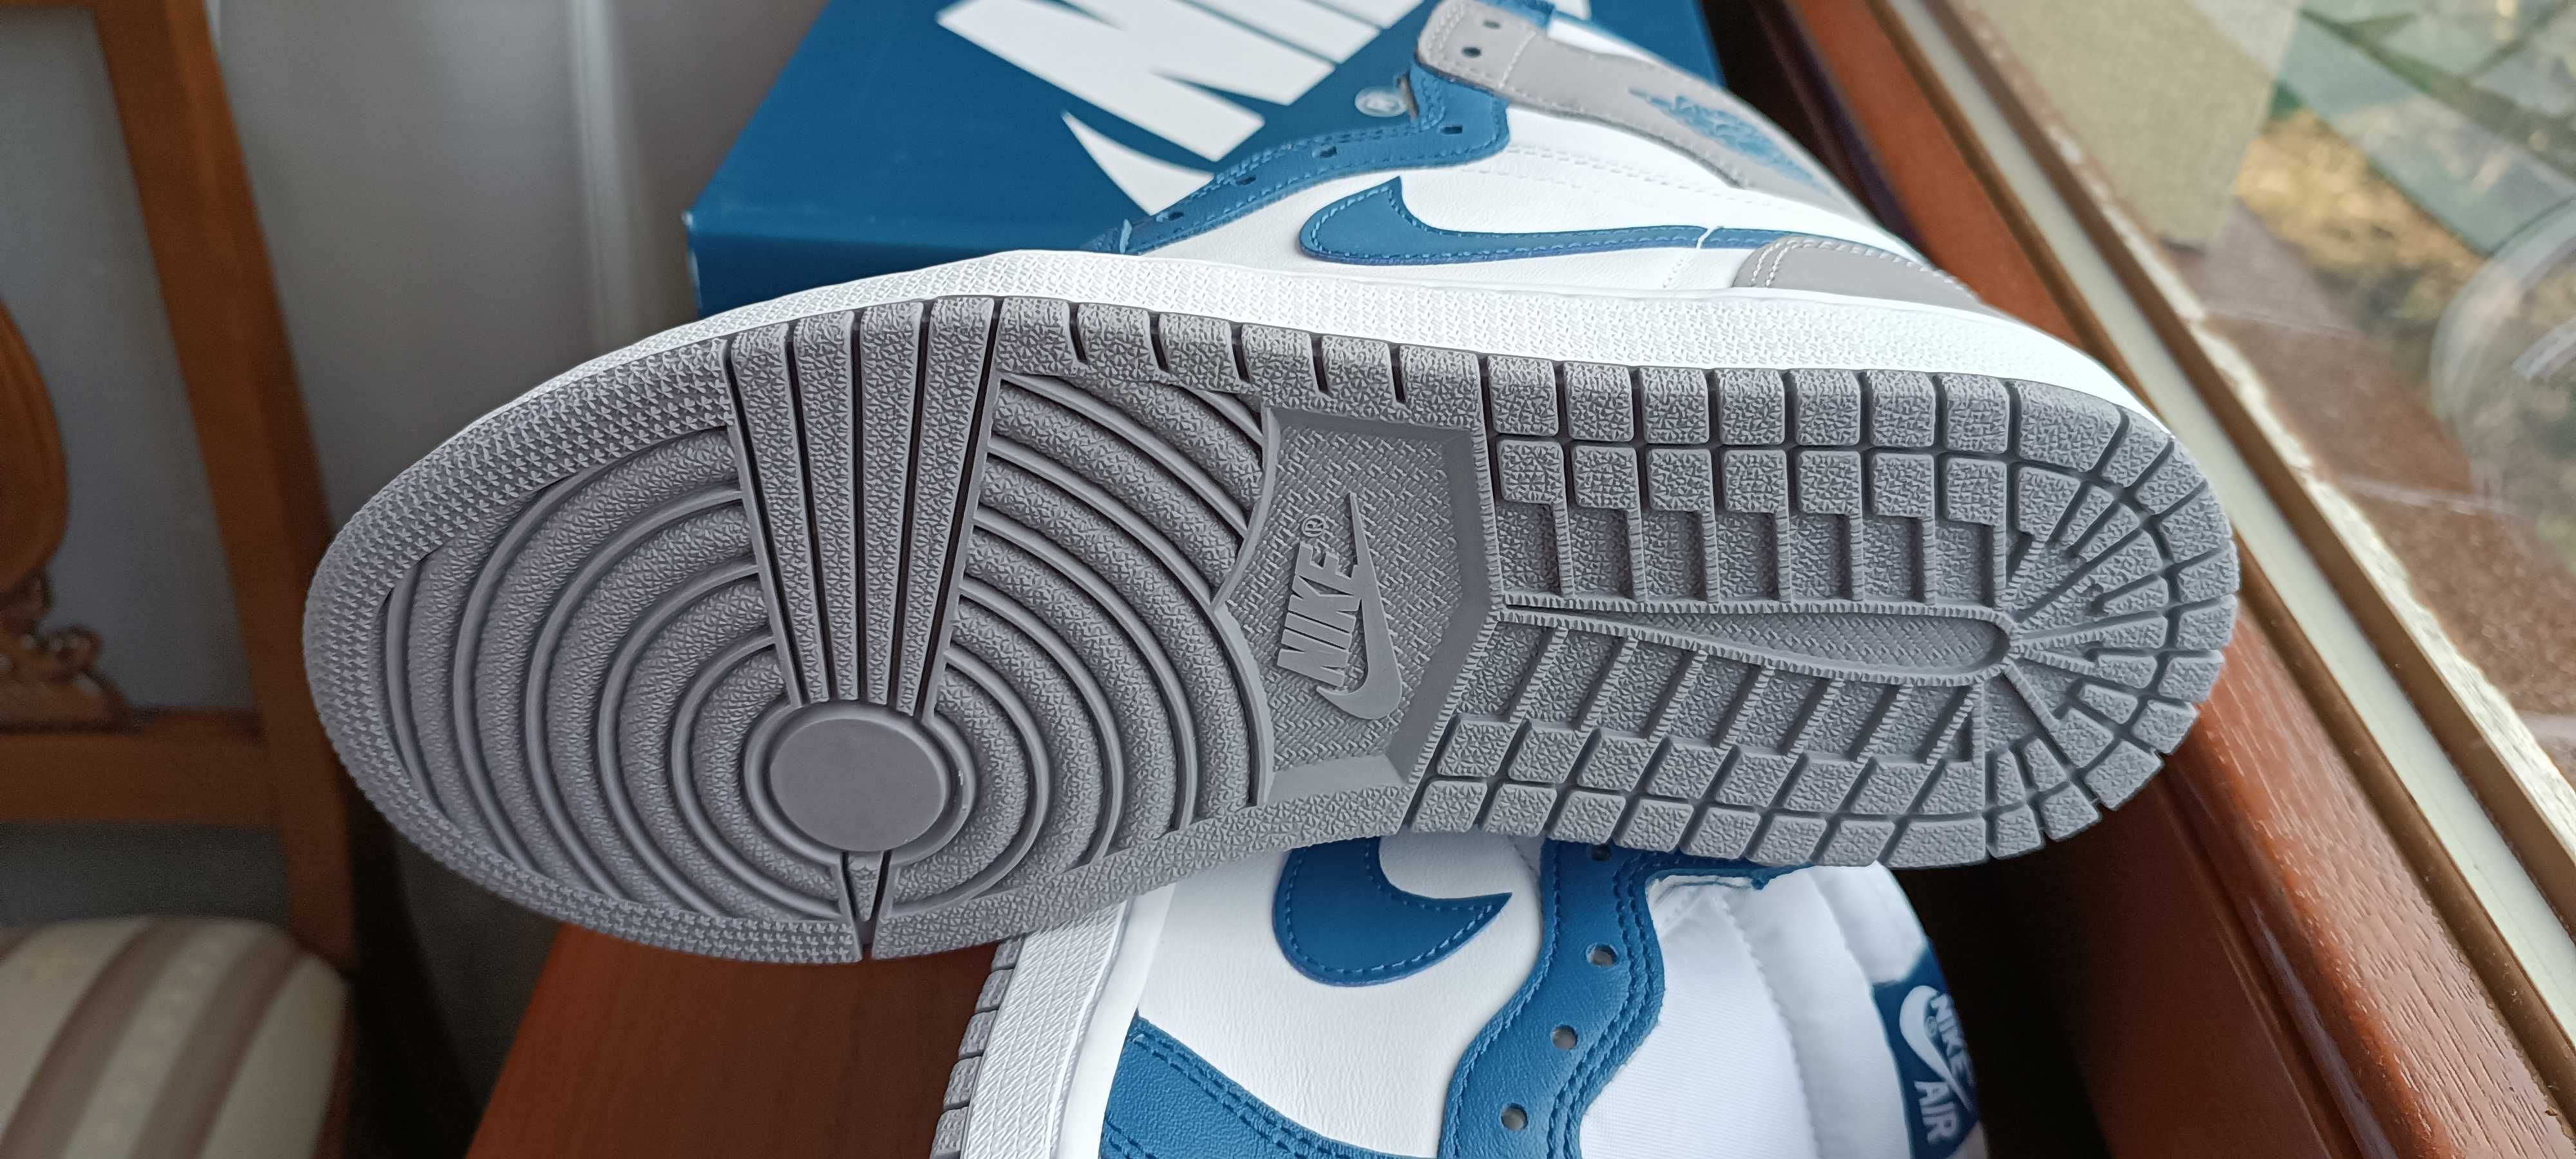 (r 42 - 26,5 cm) Nike Air Jordan 1 Retro High OG True Blue DZ5485,-410